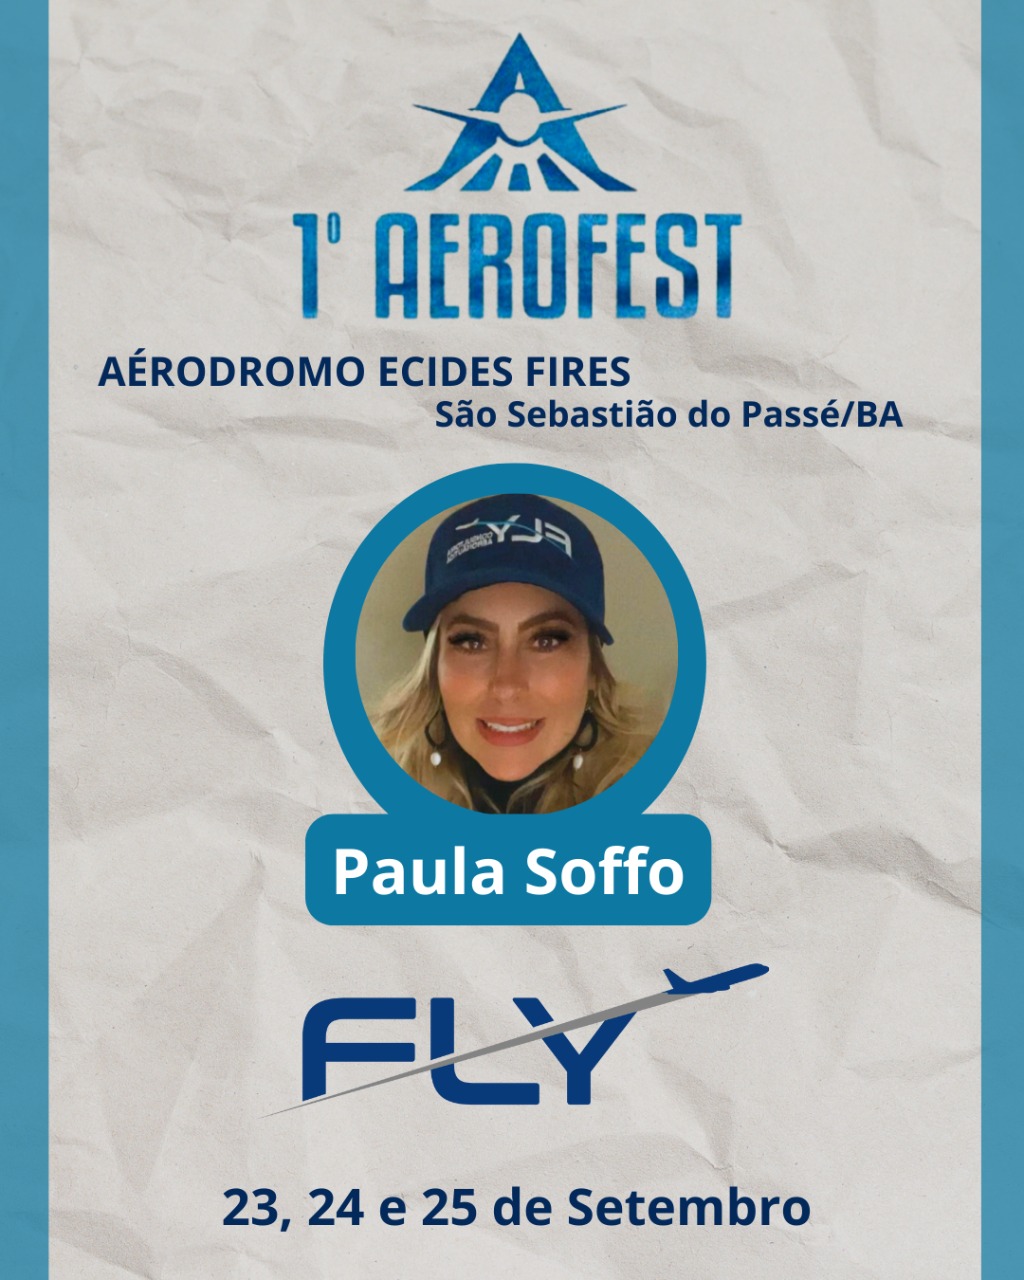 1º AEROFEST - PAULA SOFFO - FLY